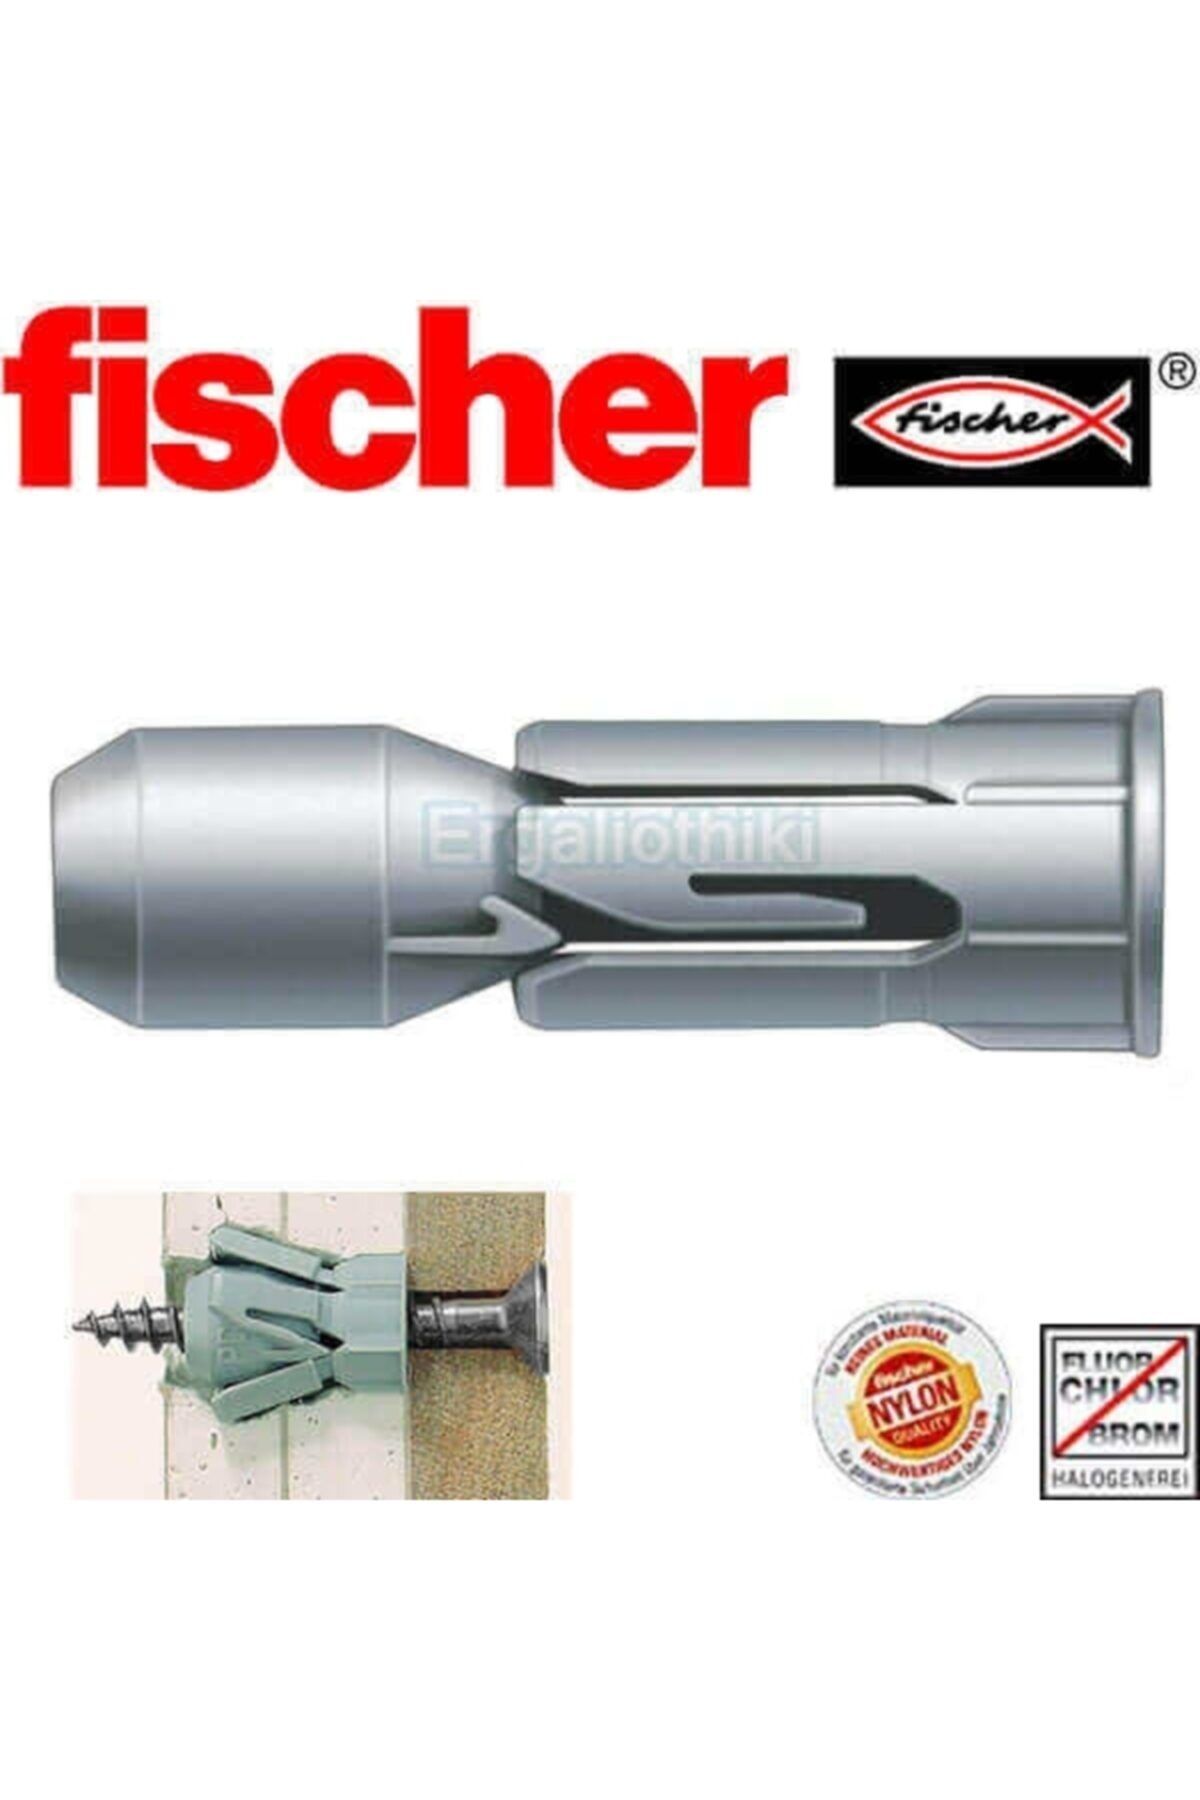 Fischer Pd 10 Boşluk Dübeli 100 Lü 15935 Pd10